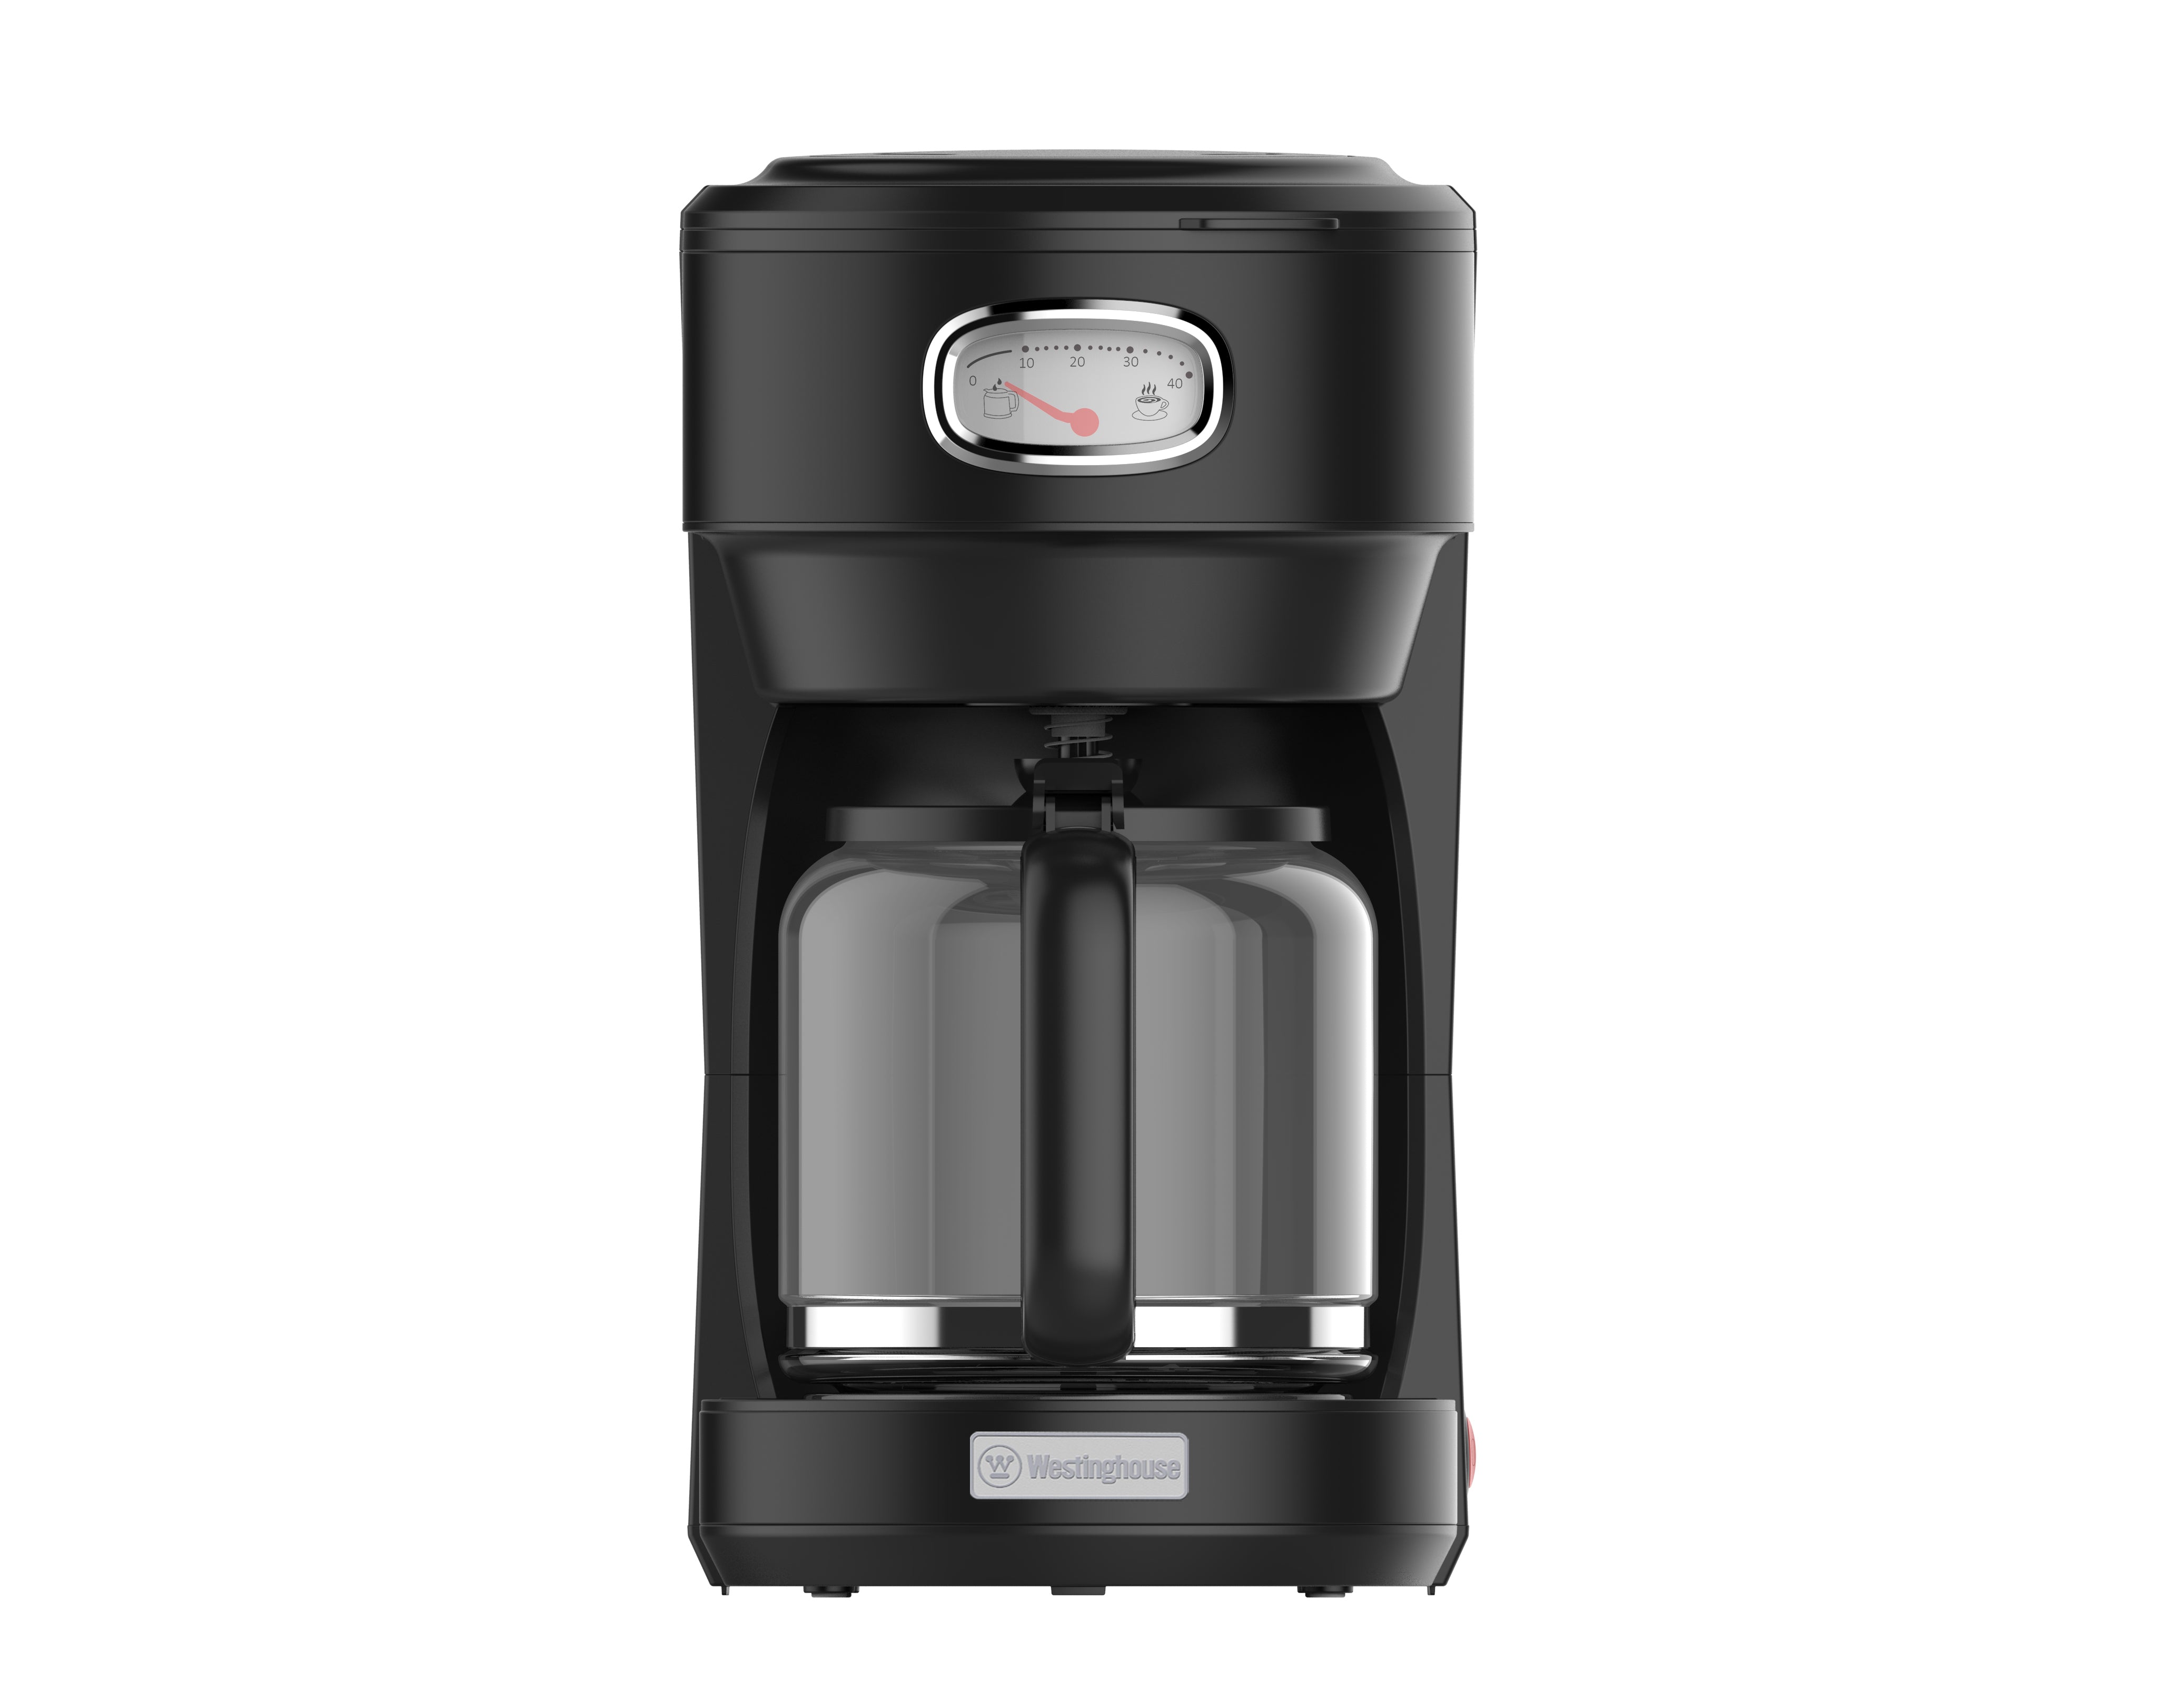 Westinghouse Retro Máquina de café - Cafetera de filtro - Blanco